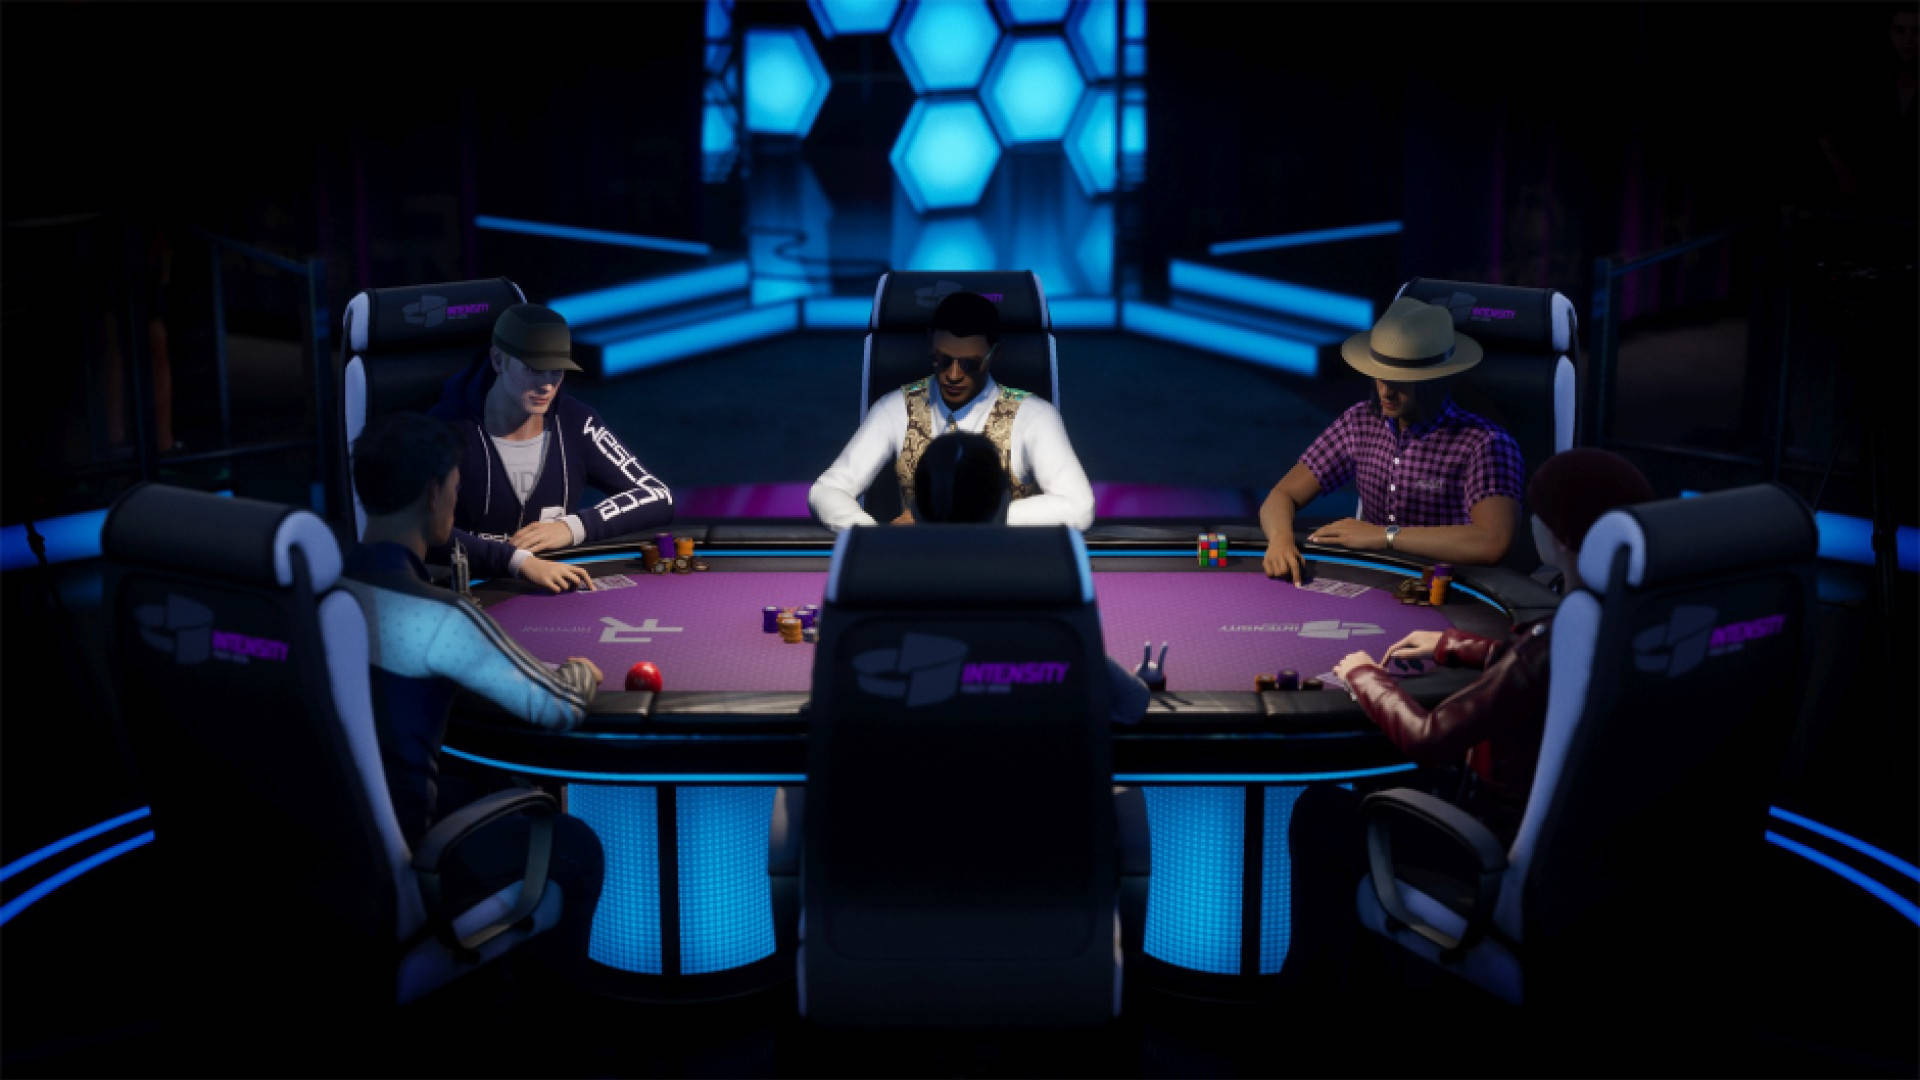 Poker Table In Video Game Wallpaper